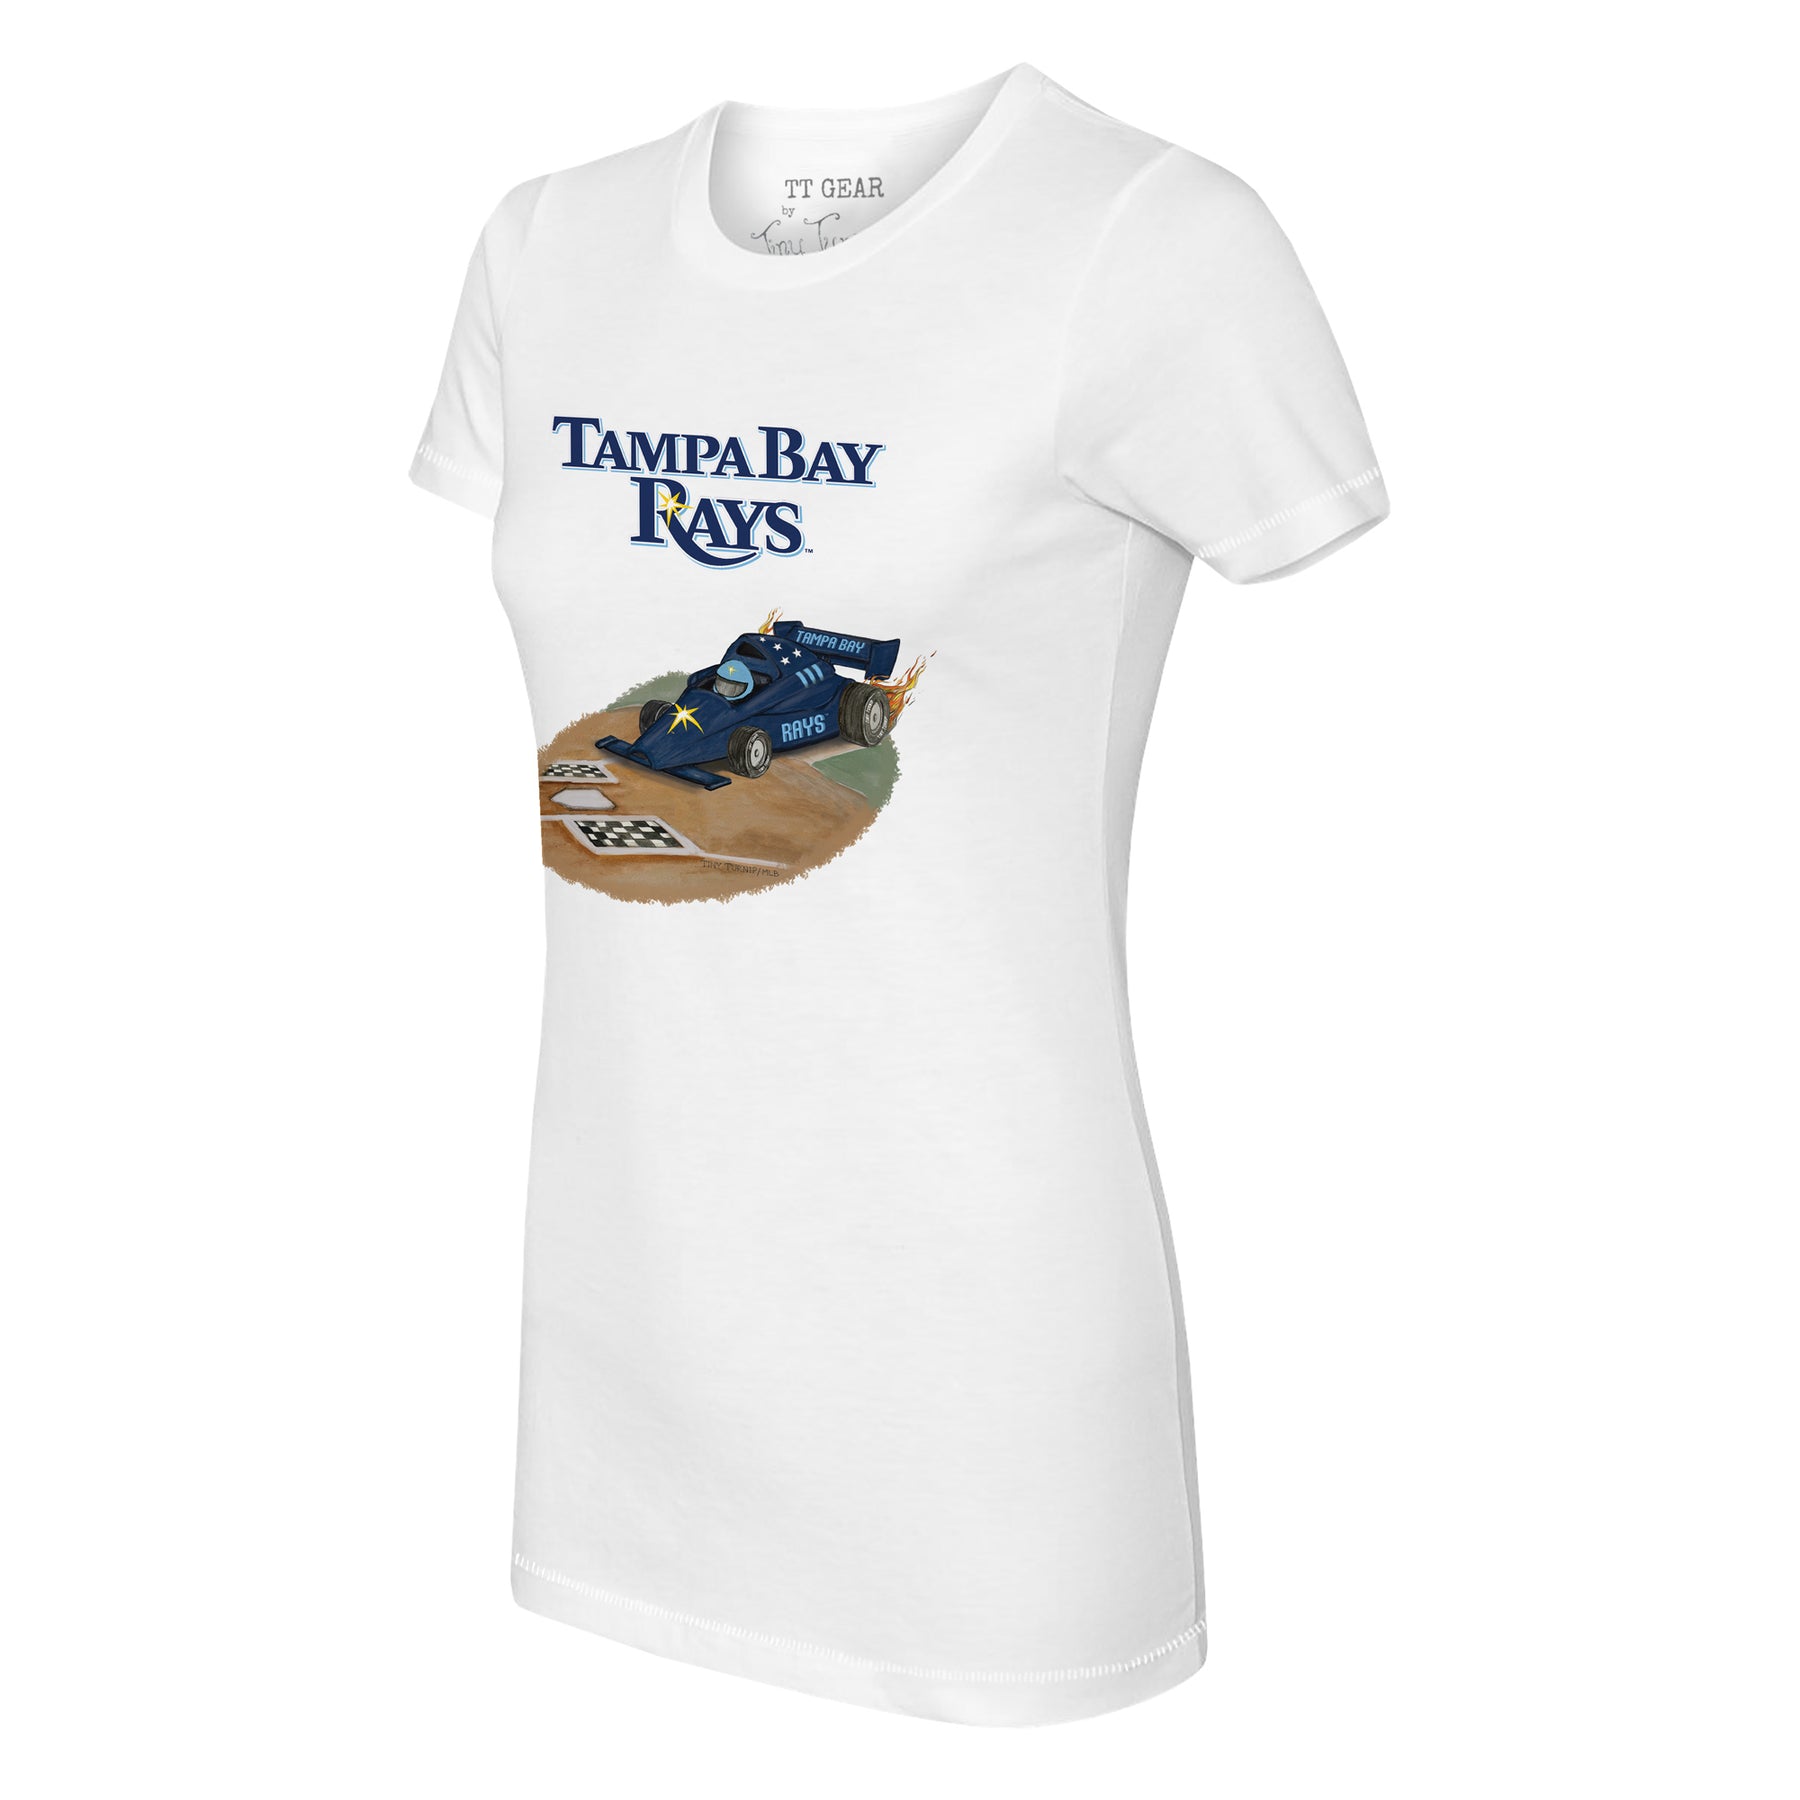 Tampa Bay Rays Race Car Tee Shirt